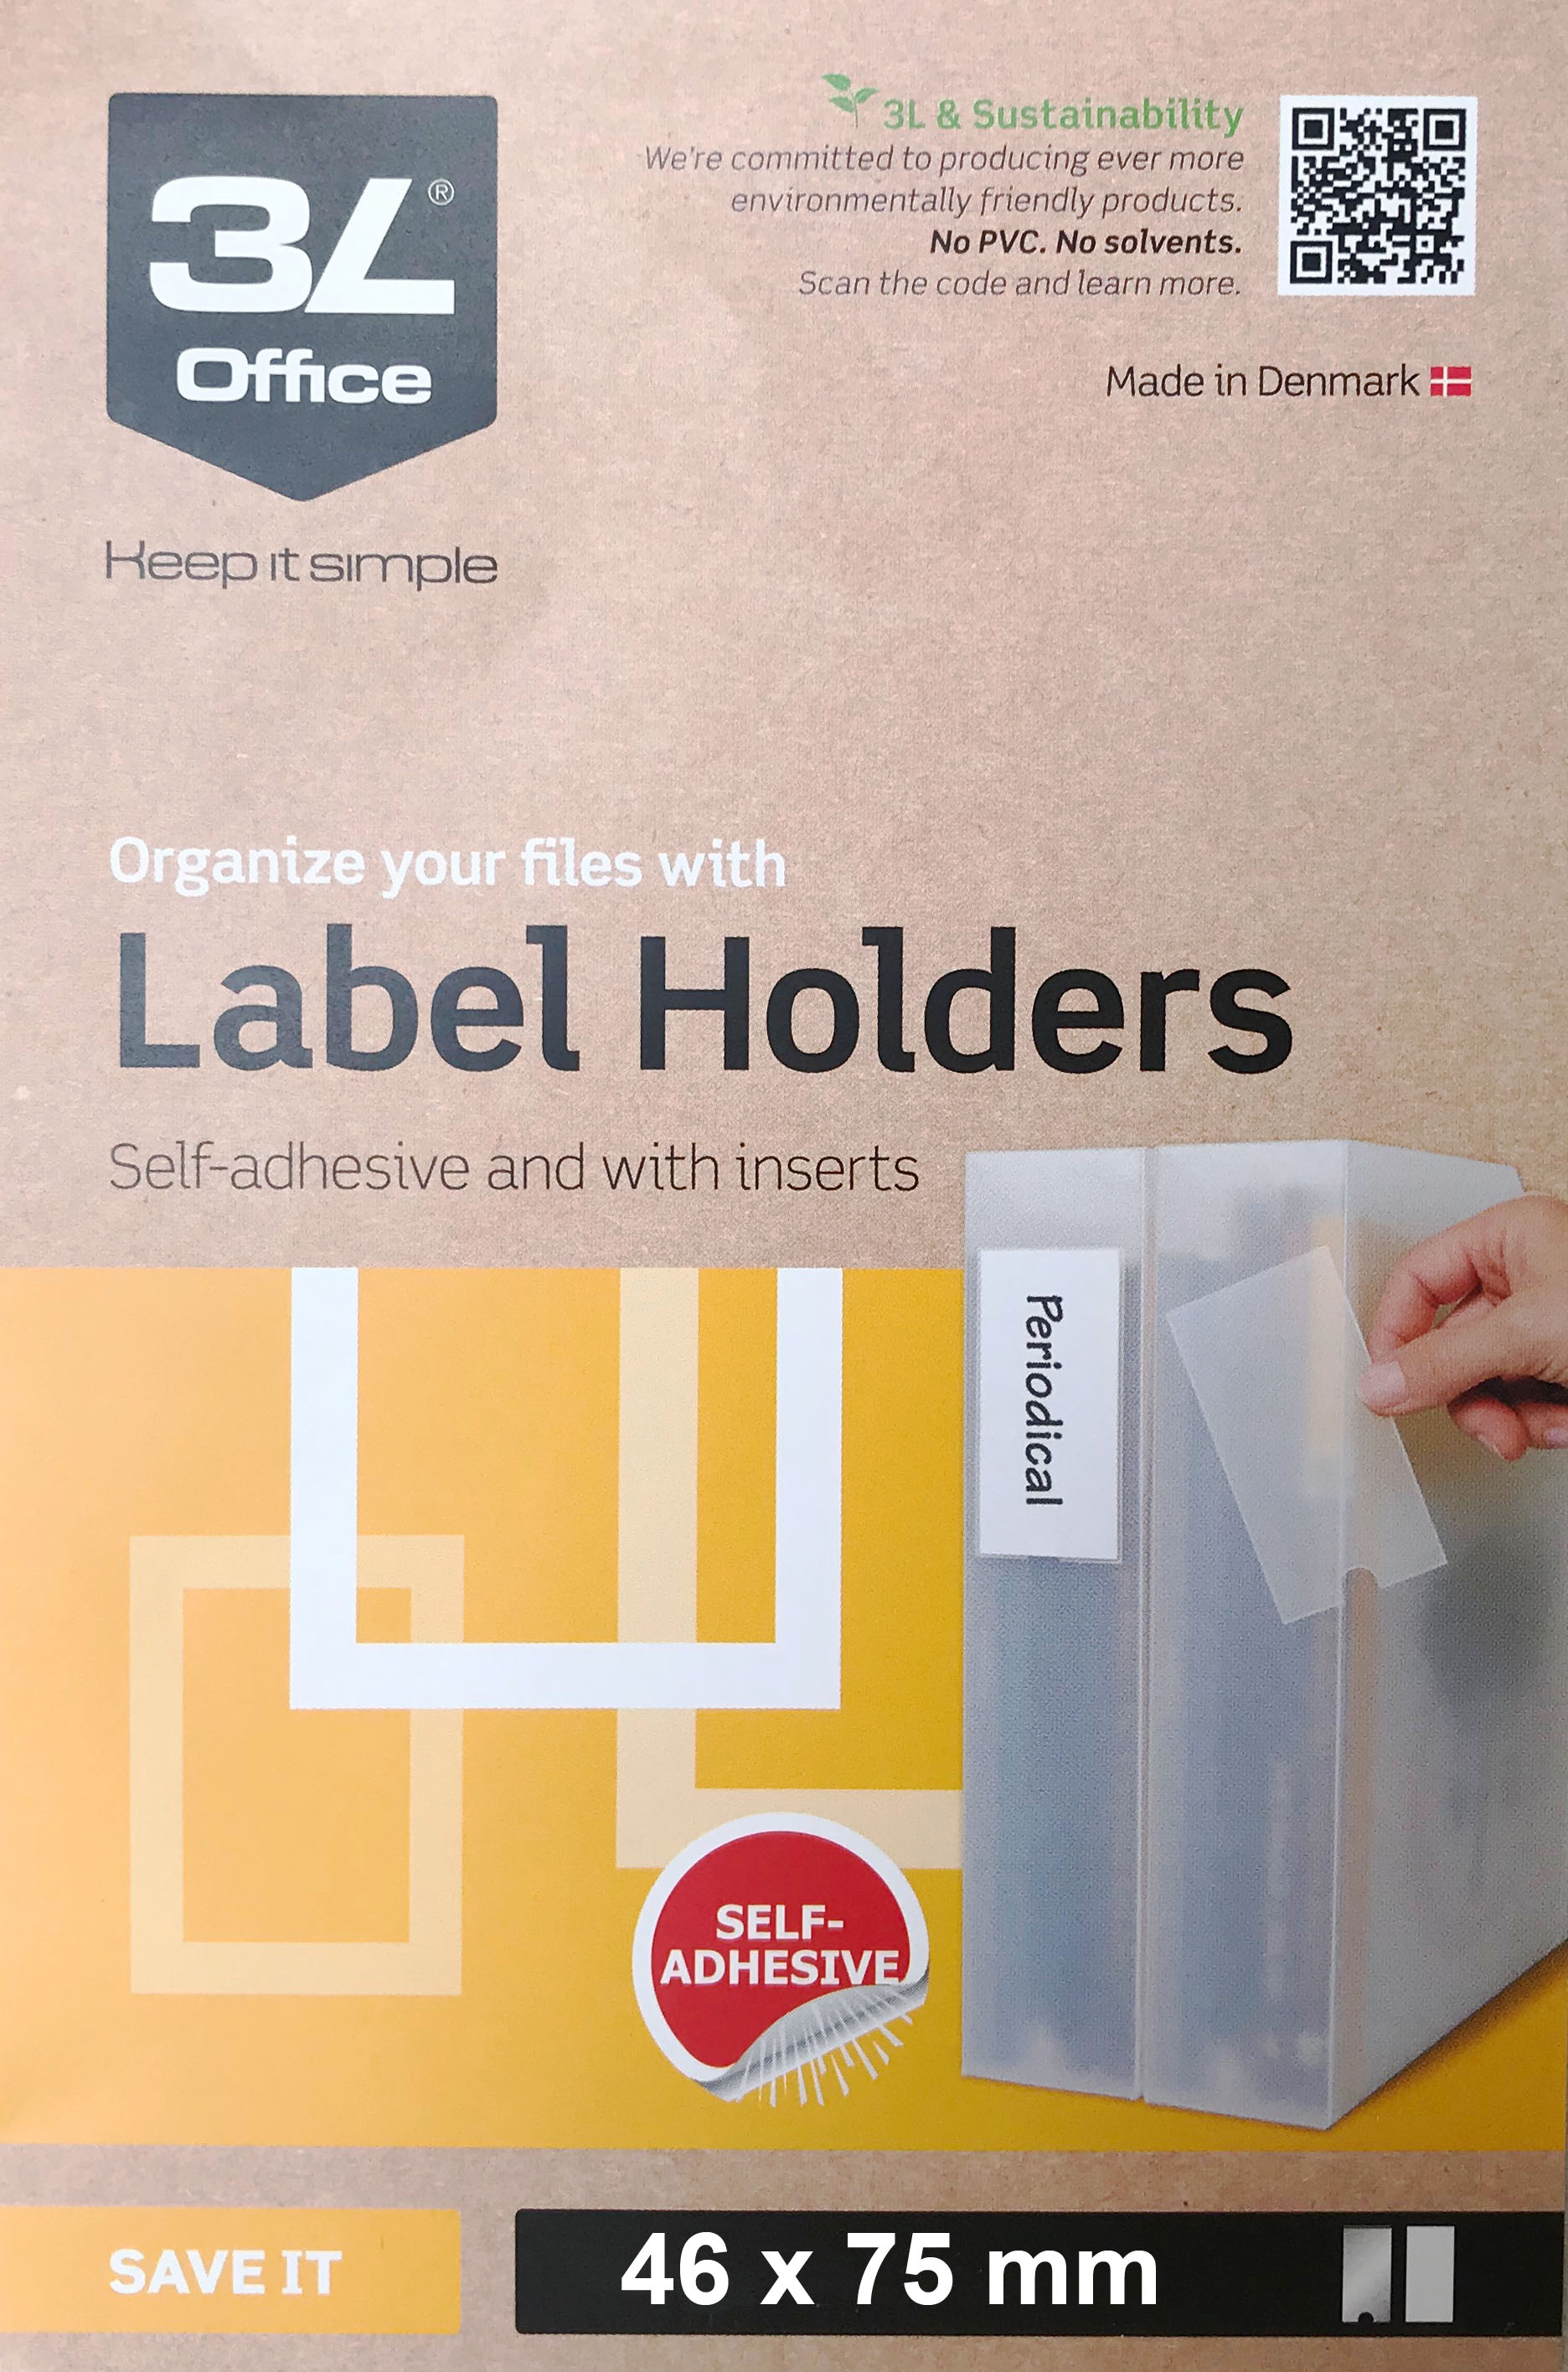 3L Label holders - 46 x 75 mm